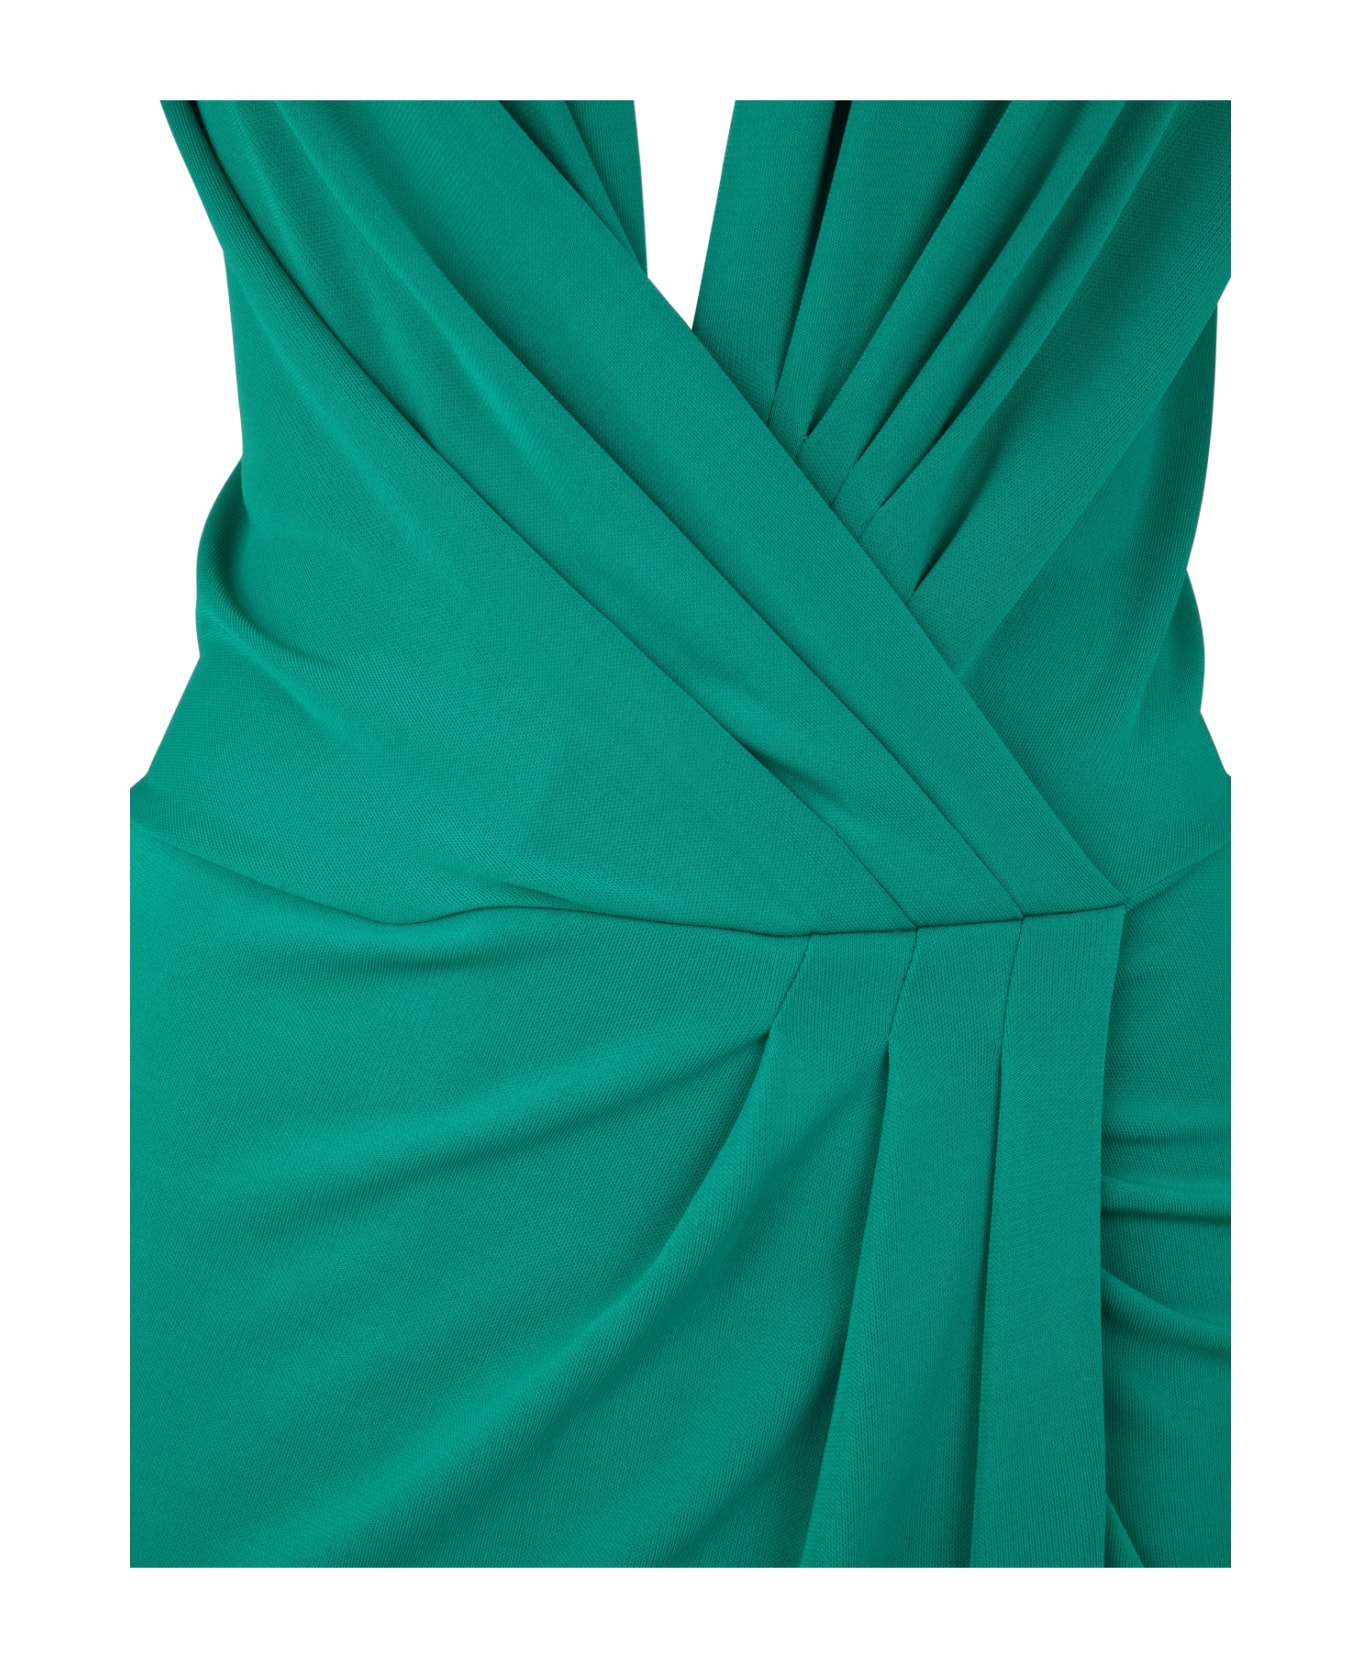 Alberta Ferretti Wrap Midi Dress - Emerald